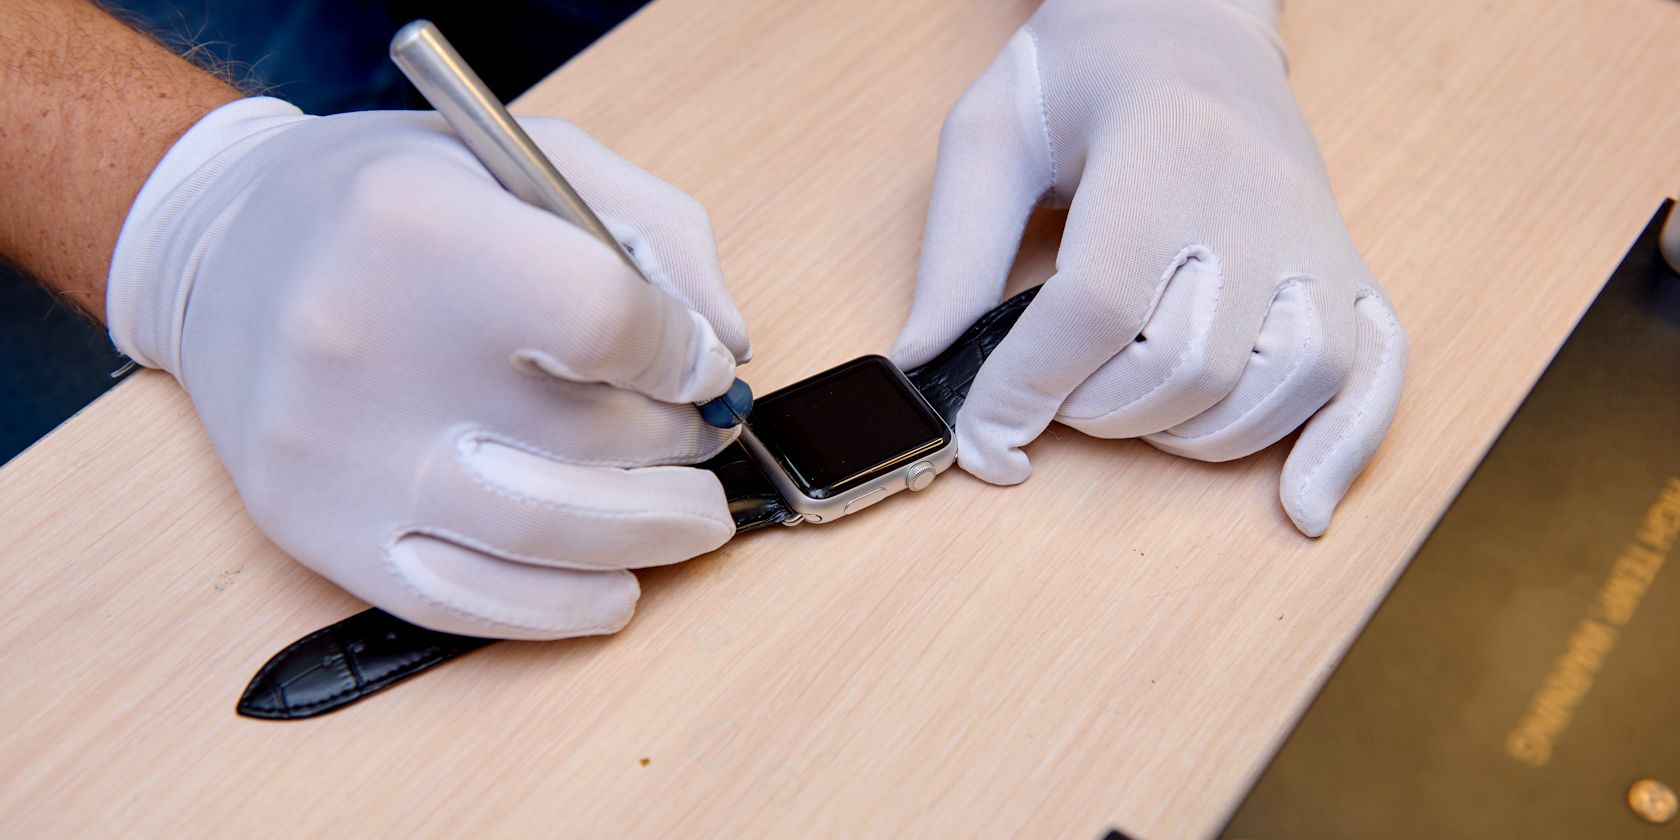 Apple Watch Screen Broke? Here’s How to Fix it